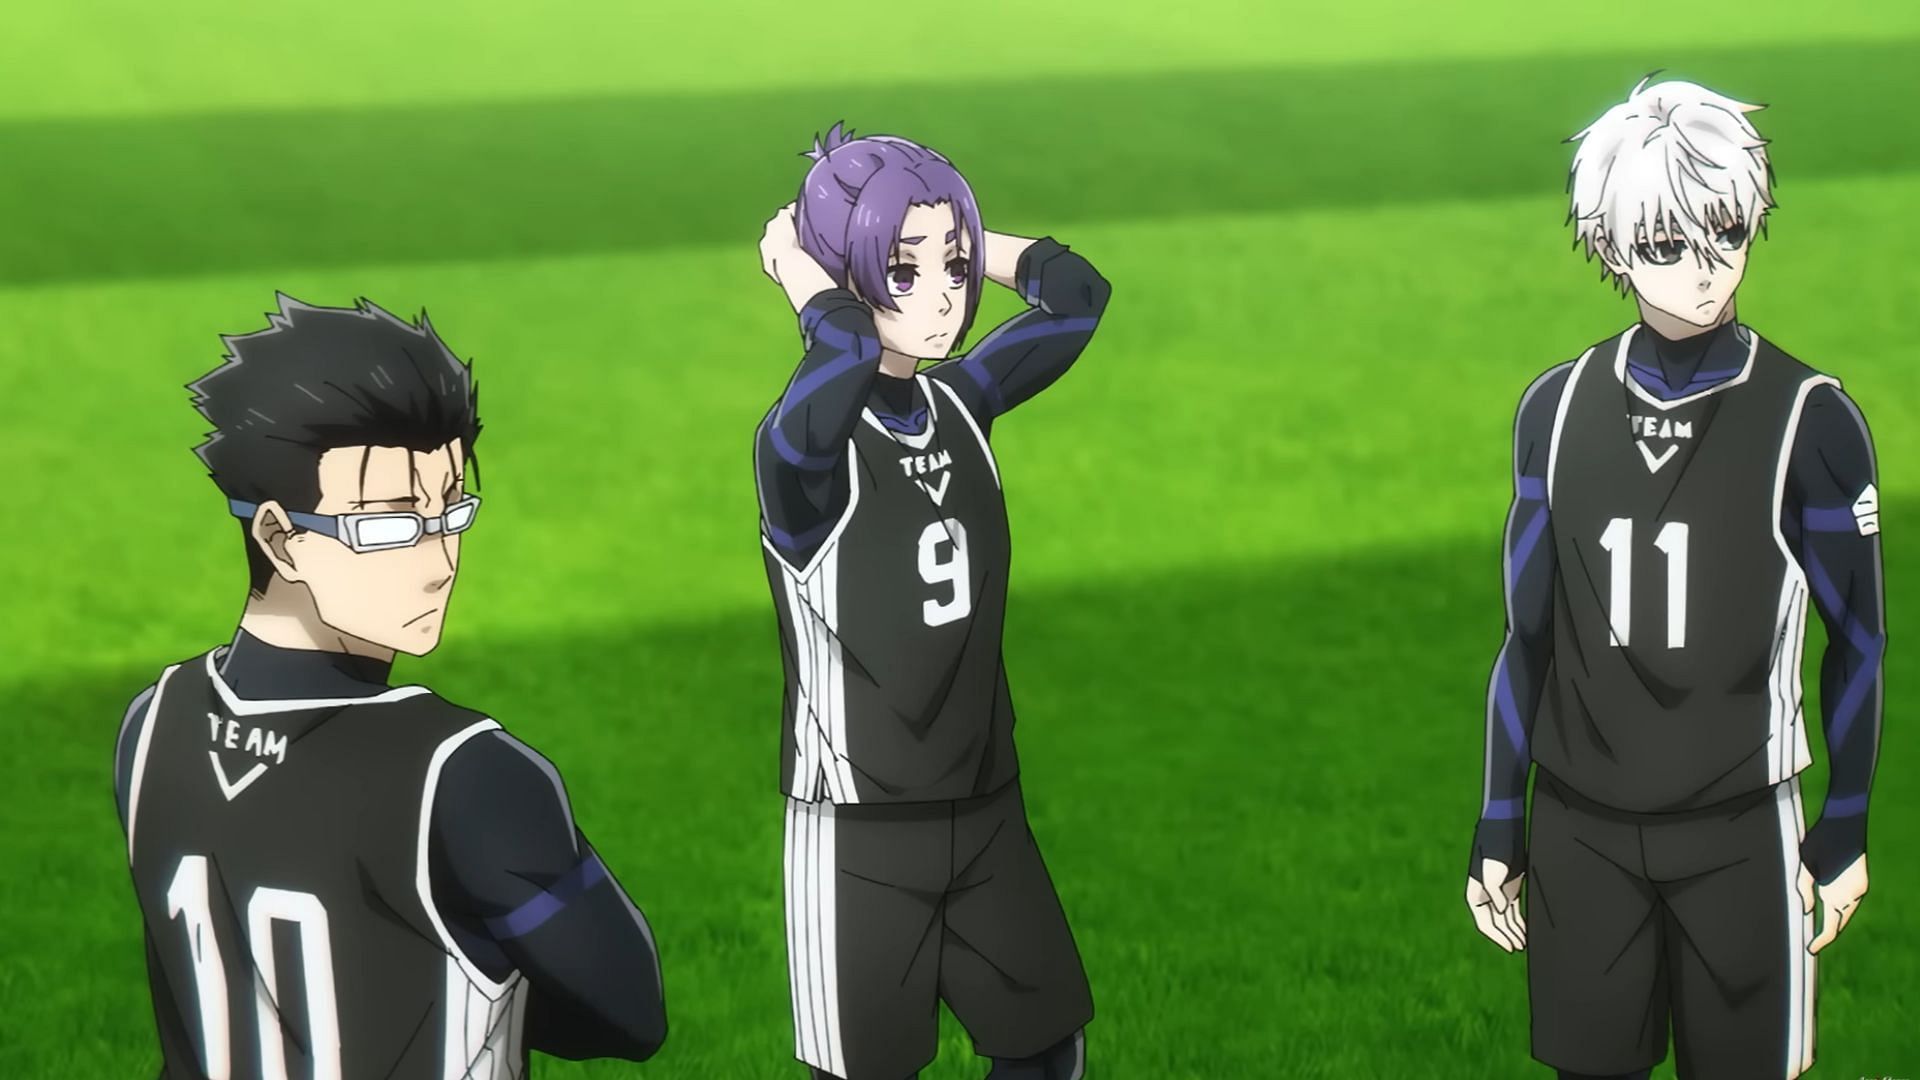 Zantetsu, Reo, and Nagi as seen in the anime (Image via 8bit)